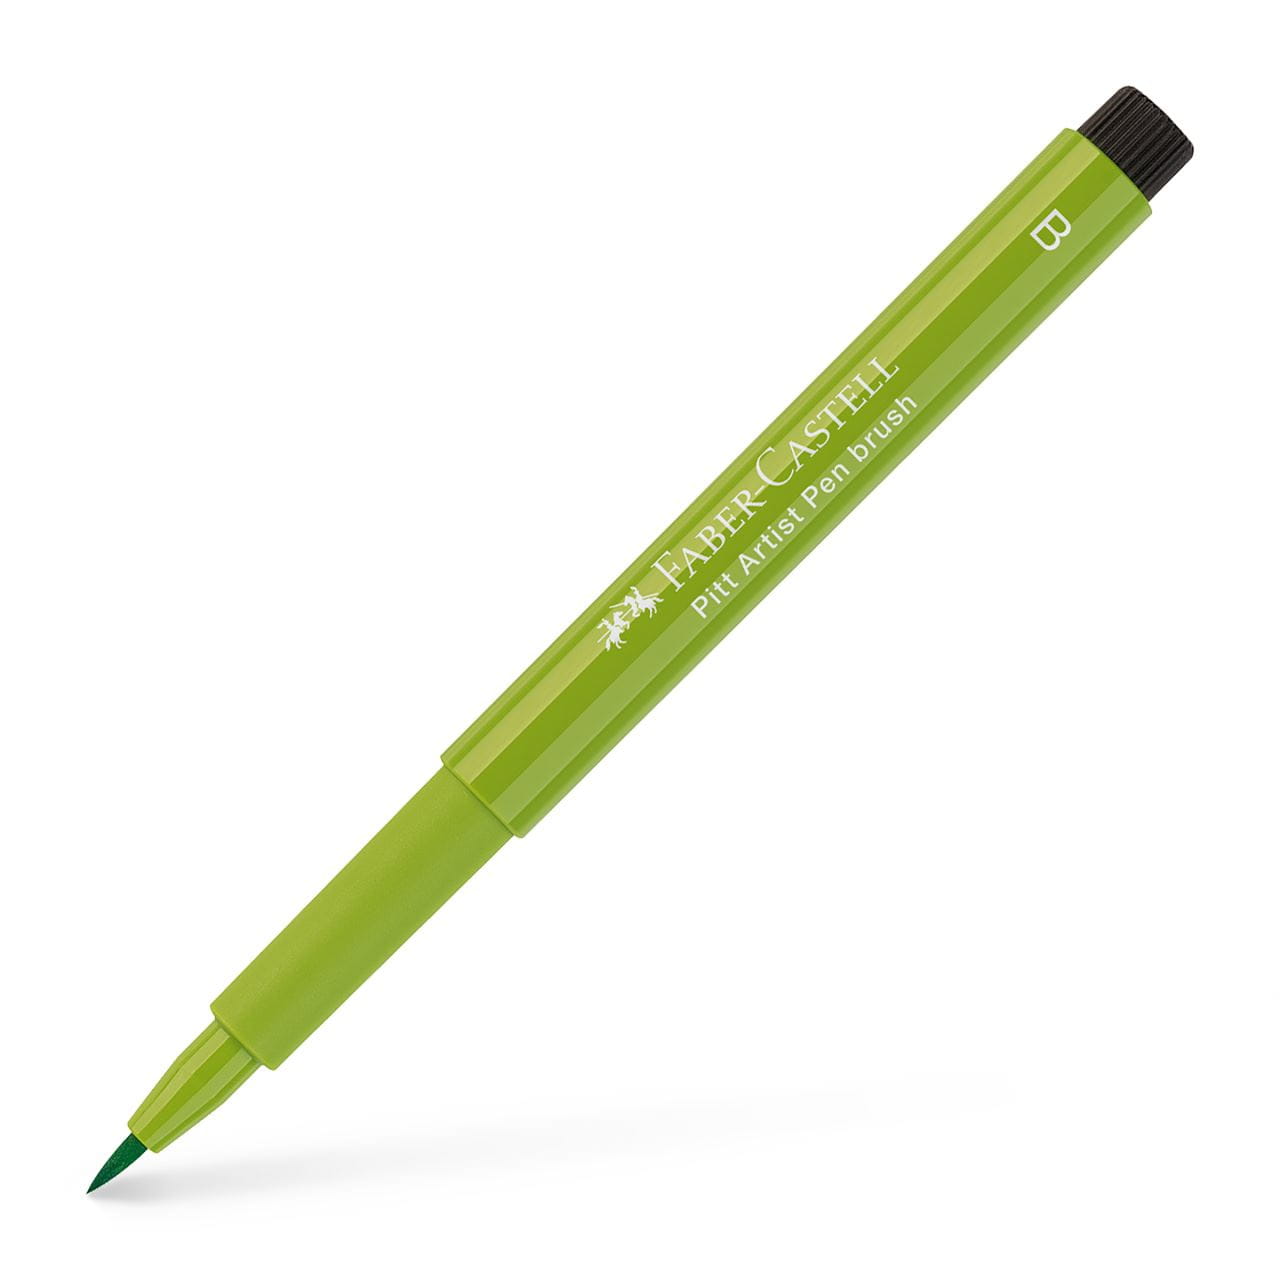 Faber-Castell - Pitt Artist Pen Brush India ink pen, may green